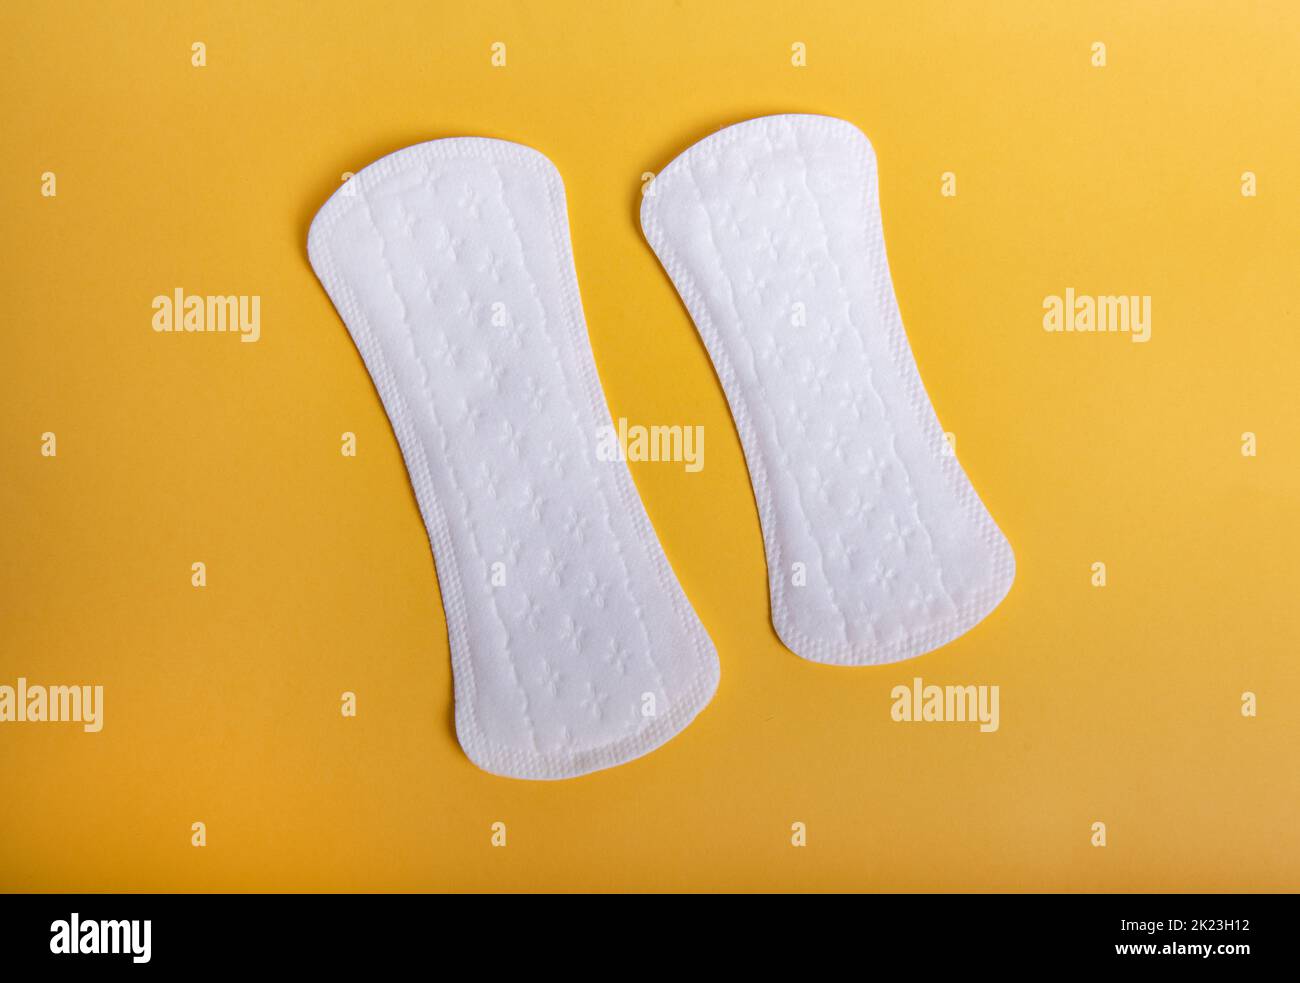 Menstrual pads on orange background. Stock Photo